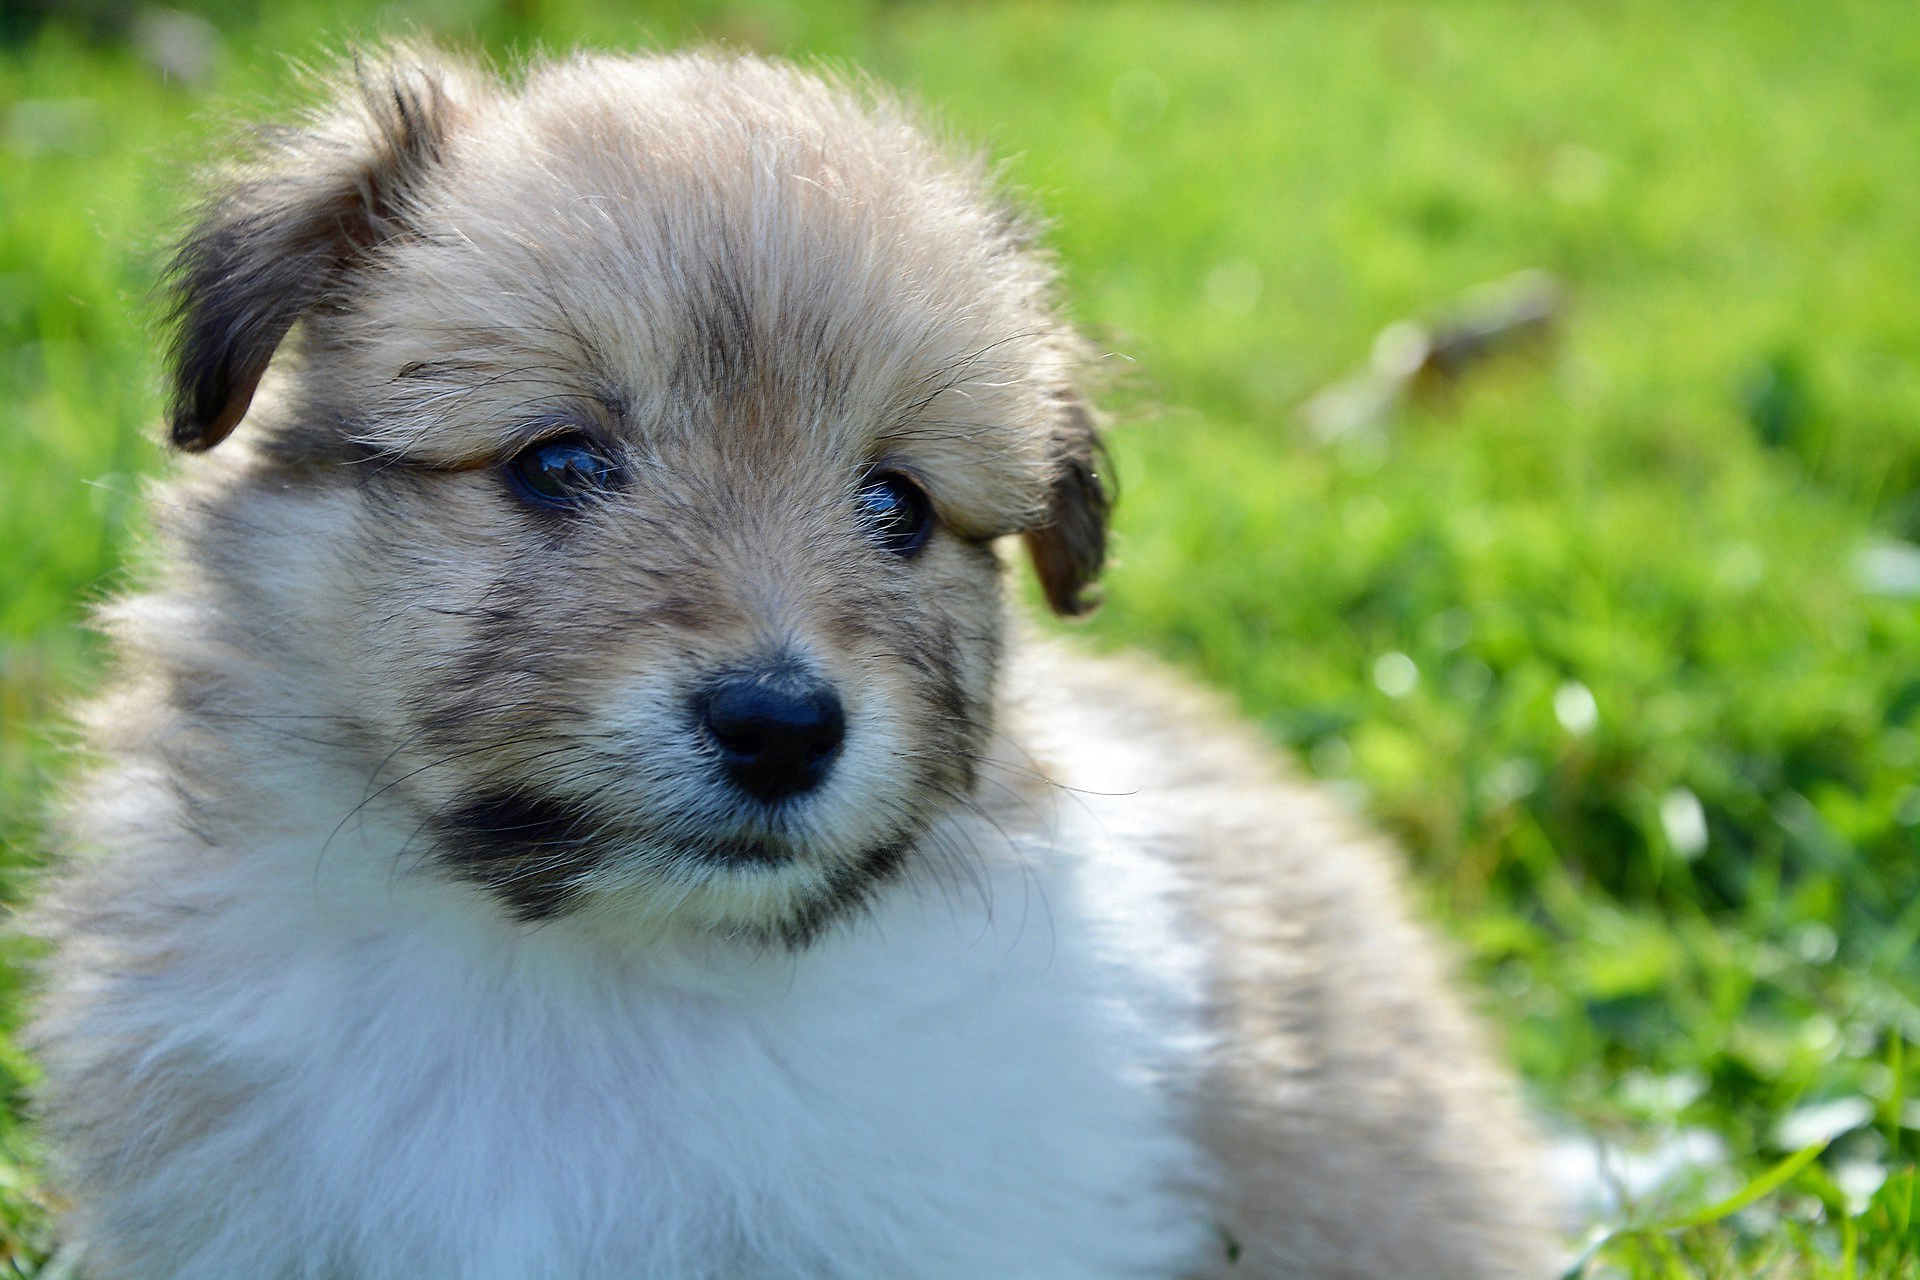 mini shetland sheepdog puppy picture.JPG
